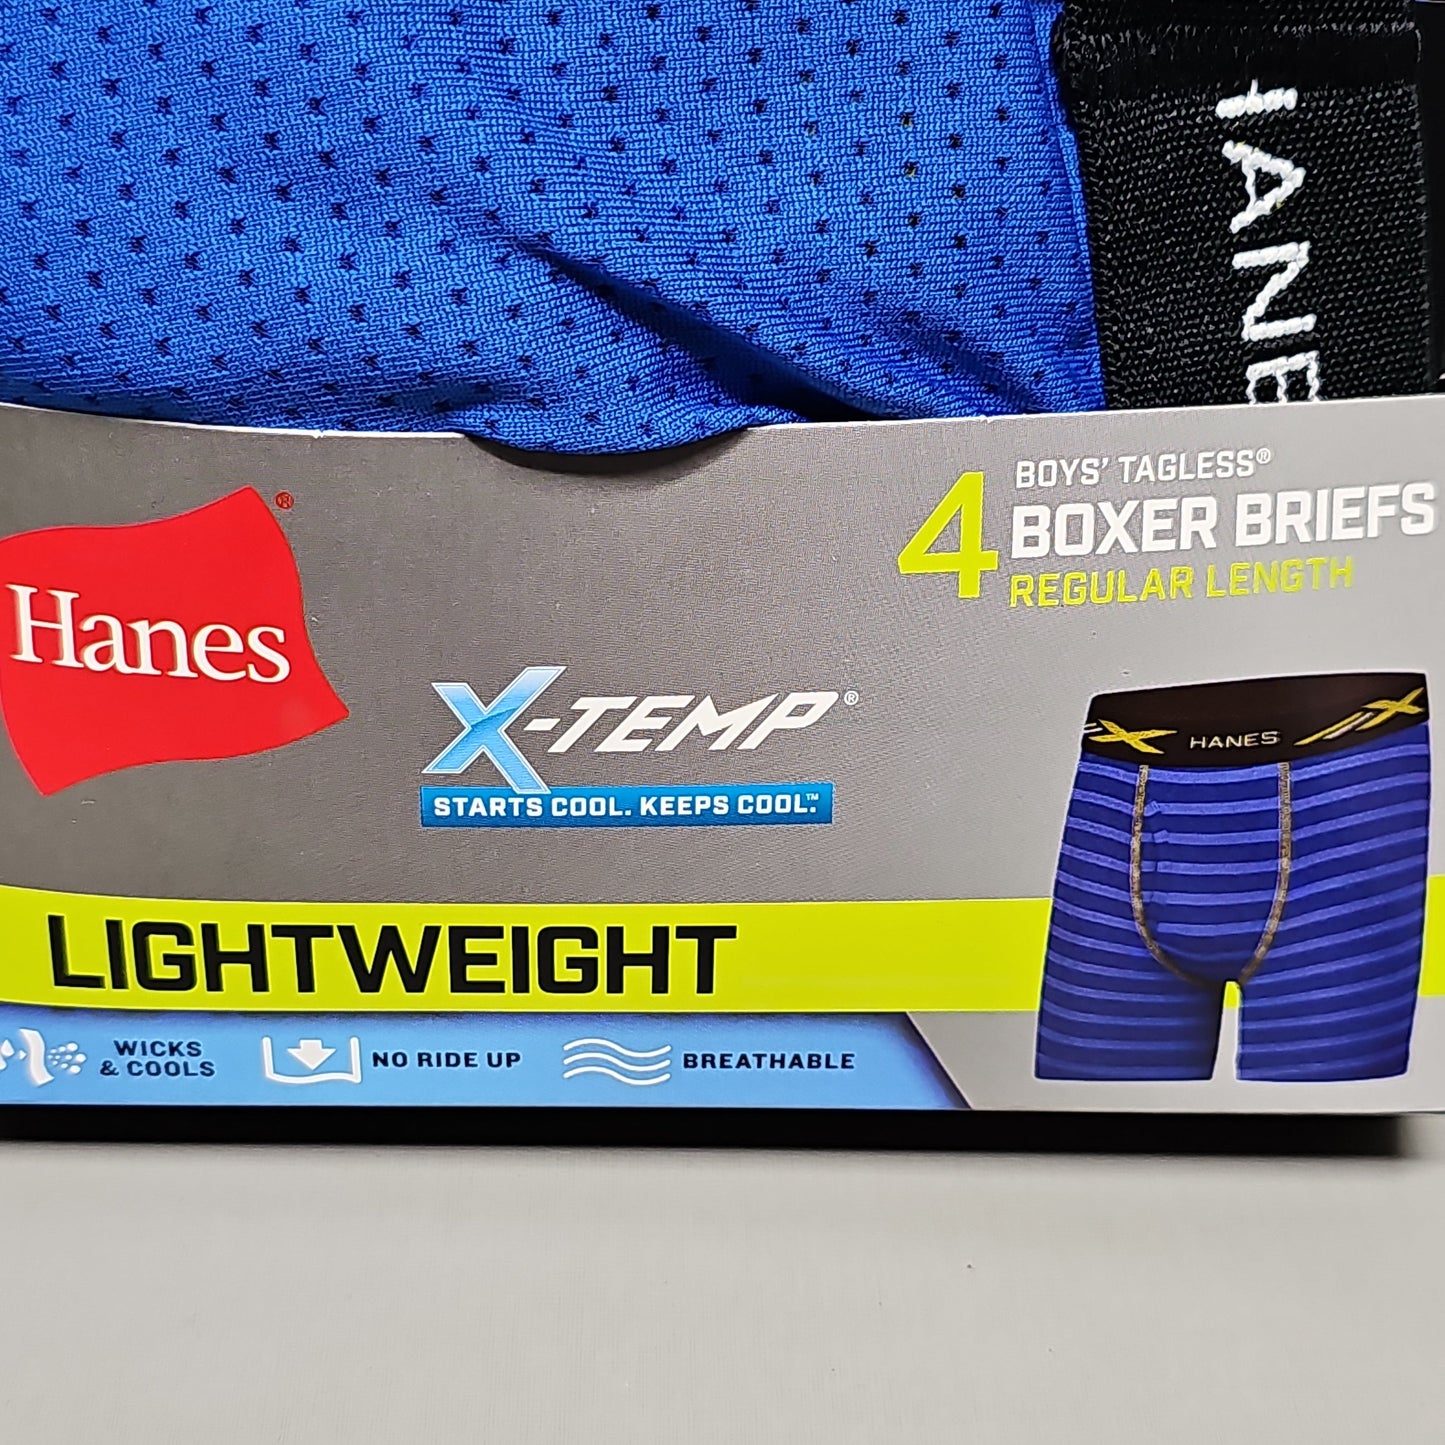 HANES Boxer Briefs 8-Pack Tagless X-Temp Boy's Size M (10/12) BXFMX4 (New)